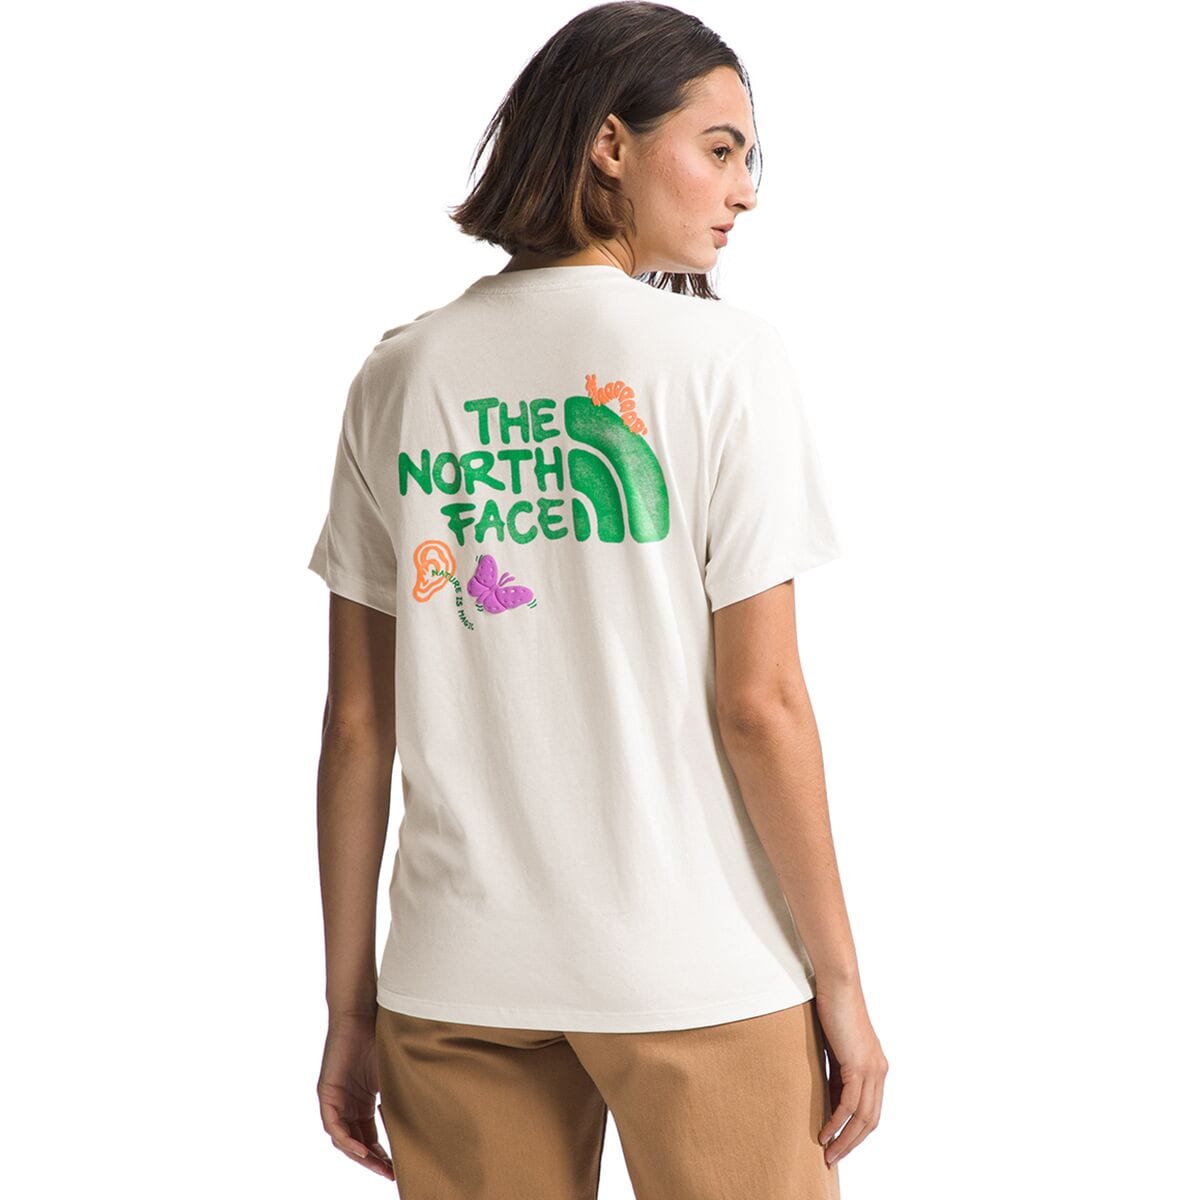 Outdoors Together T-Shirt - Women